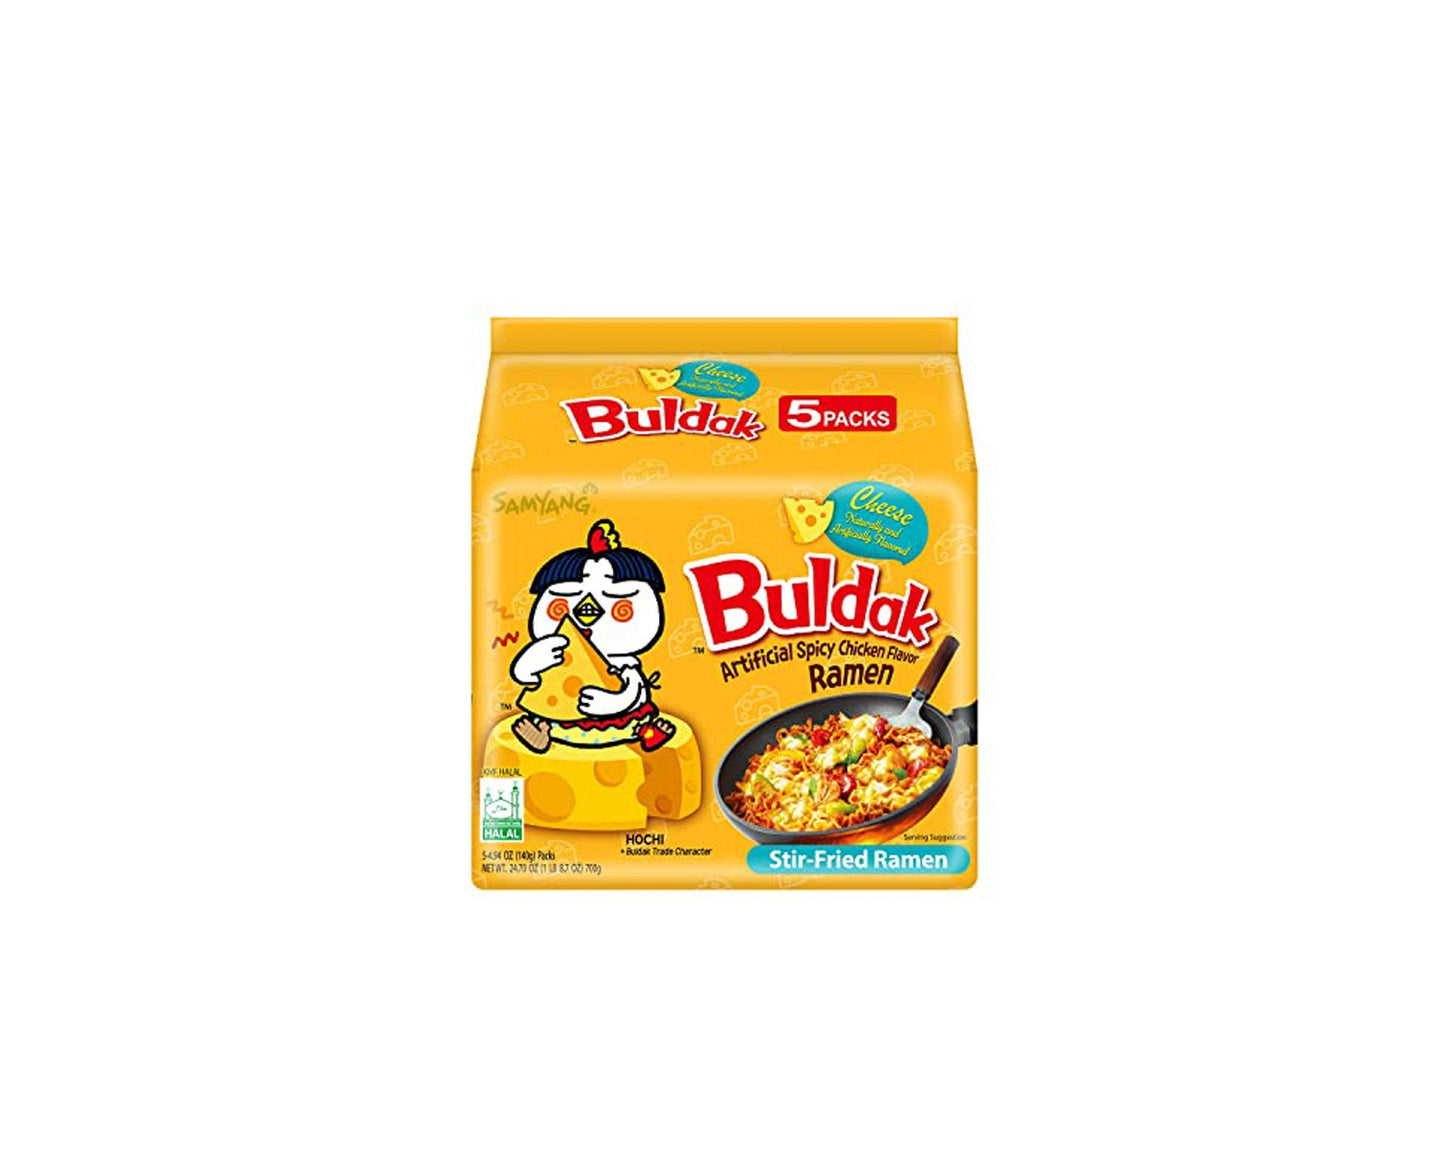 Samyang Buldak Cheese Ramen Noodles 5 Pack - Indian Spices